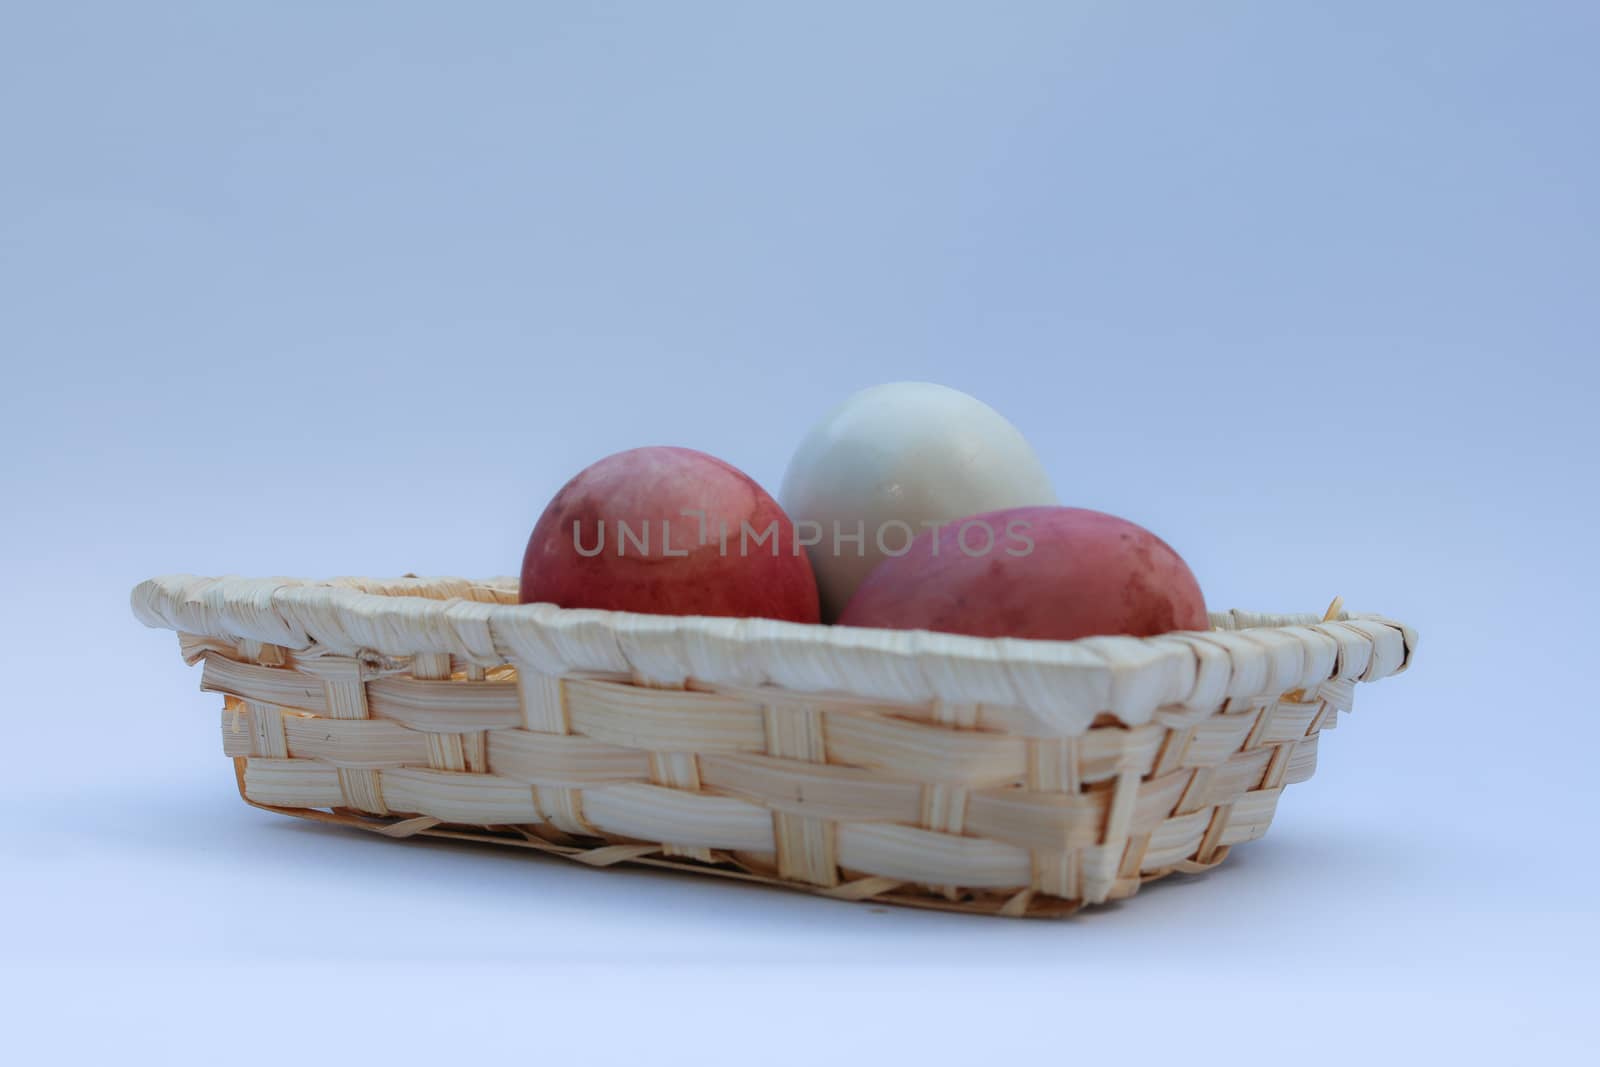 egg in basket wicker on white background